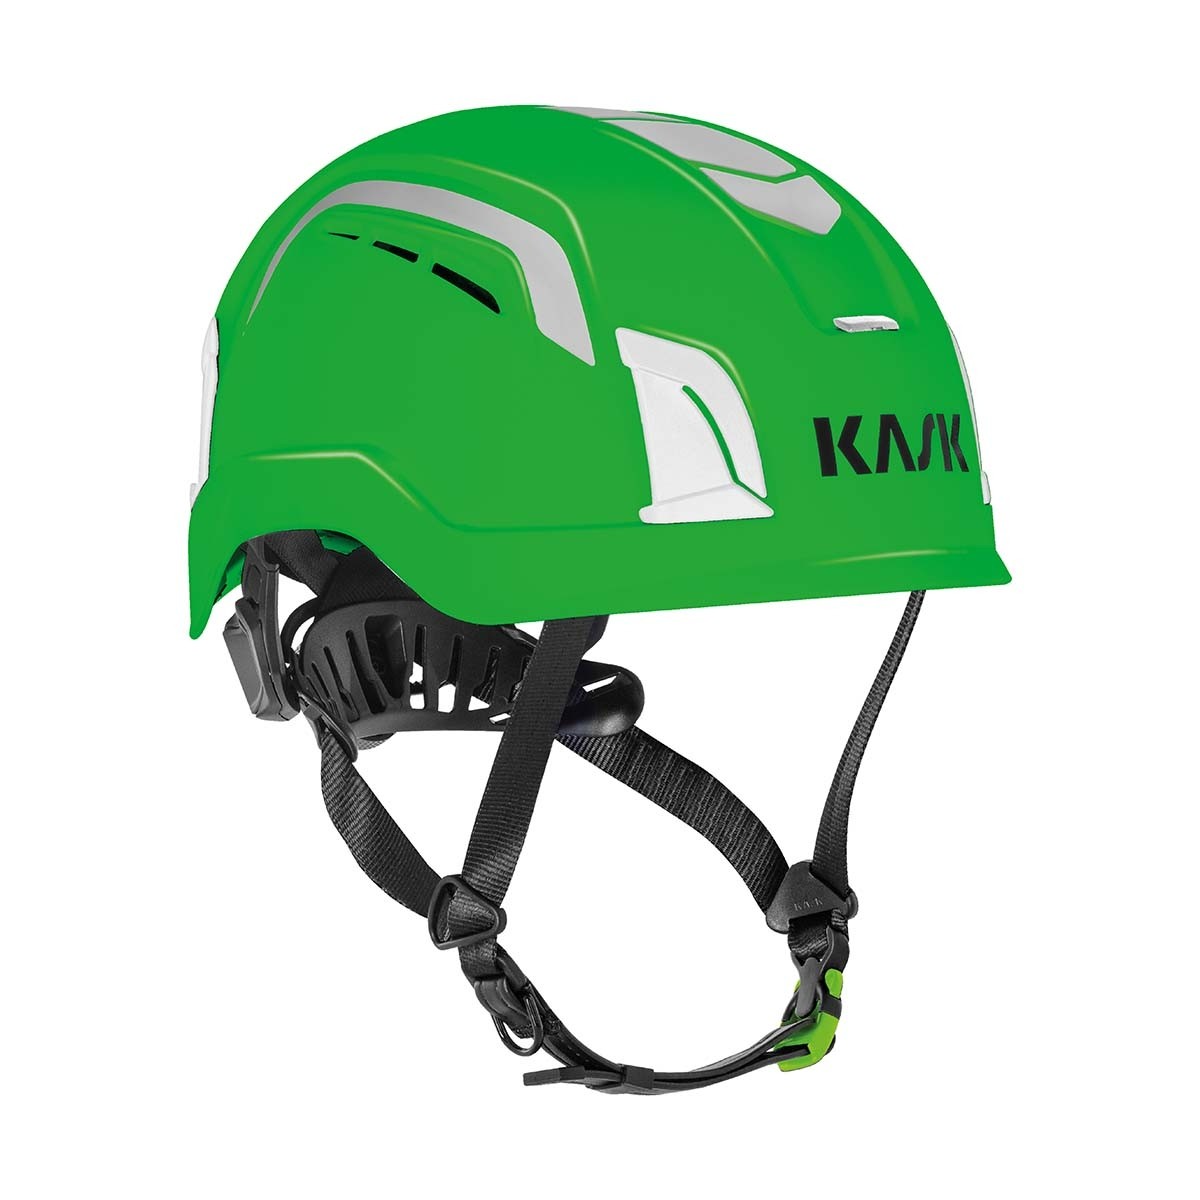 helmets › ZENITH X › ZENITH X AIR HI VIZ ANSI Z89.1 Type 1 Class 